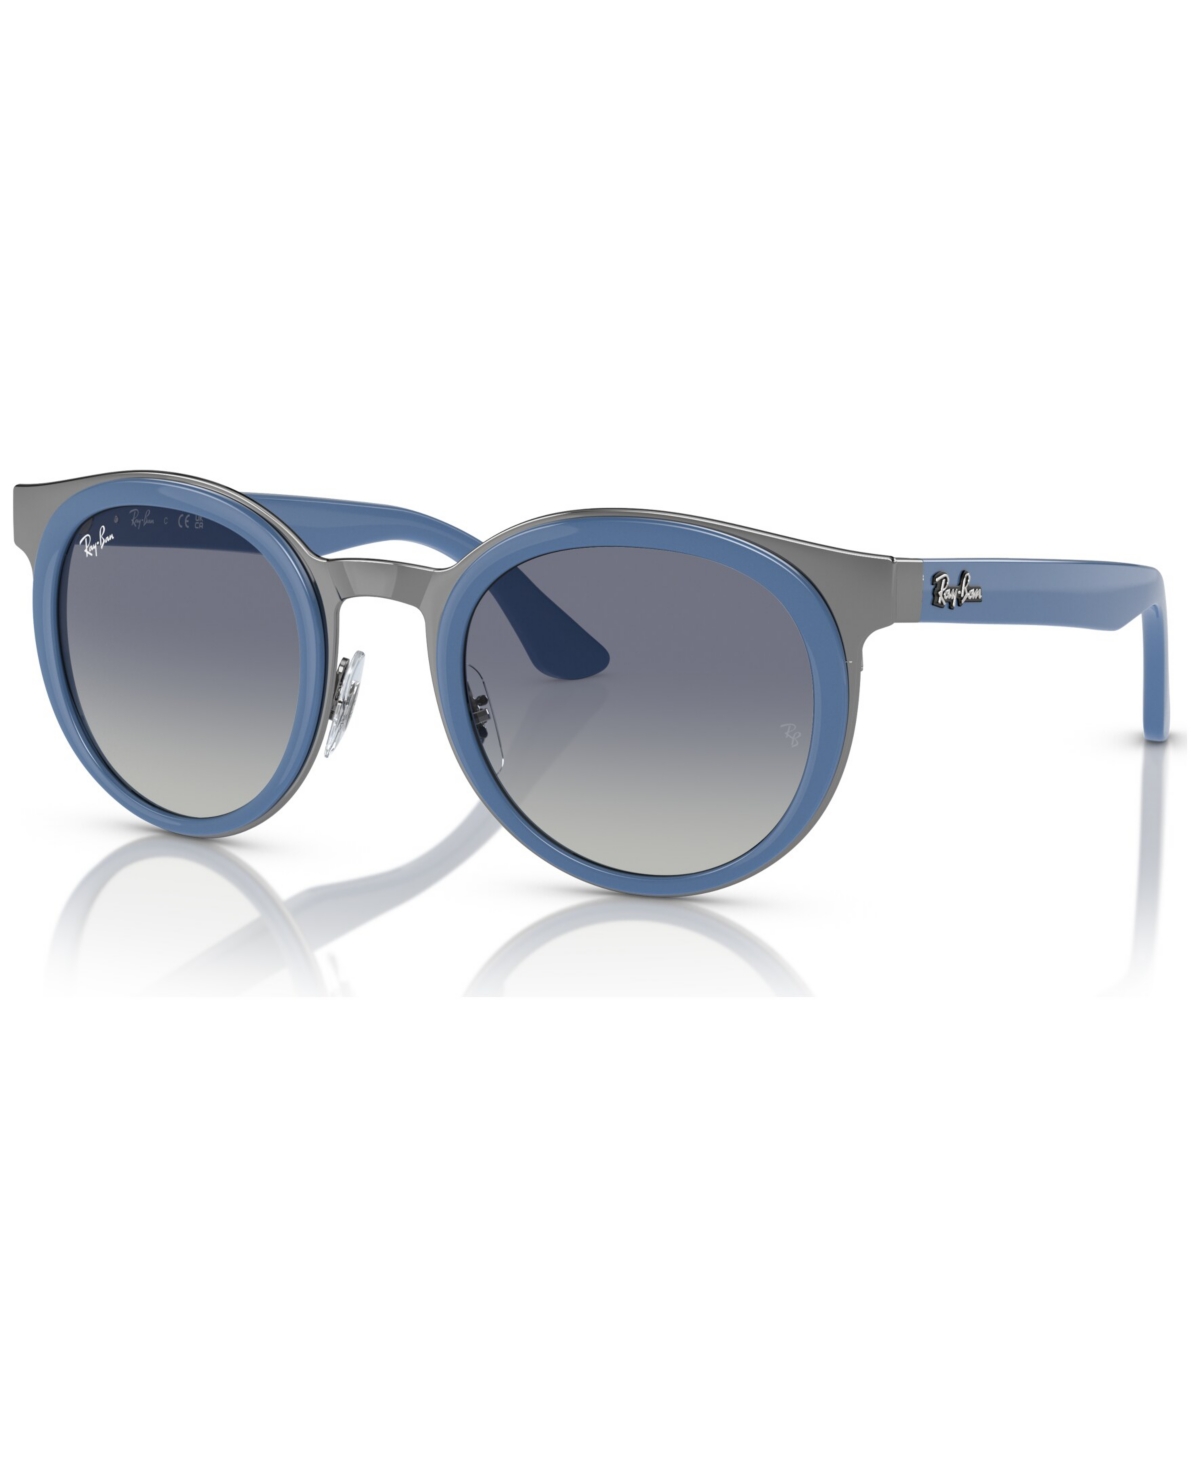 Ray Ban Unisex Sunglasses, Bonnie In Light Blue On Gunmetal